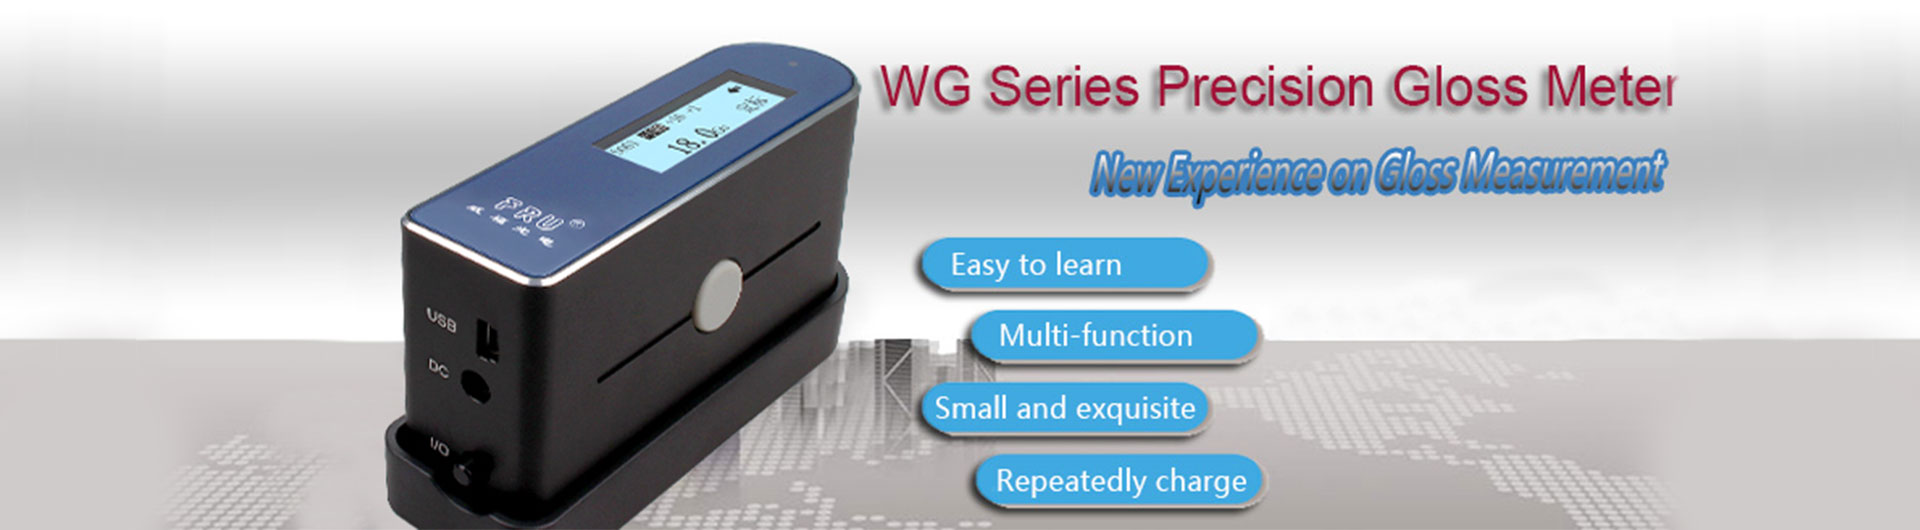 WG60 gloss meter